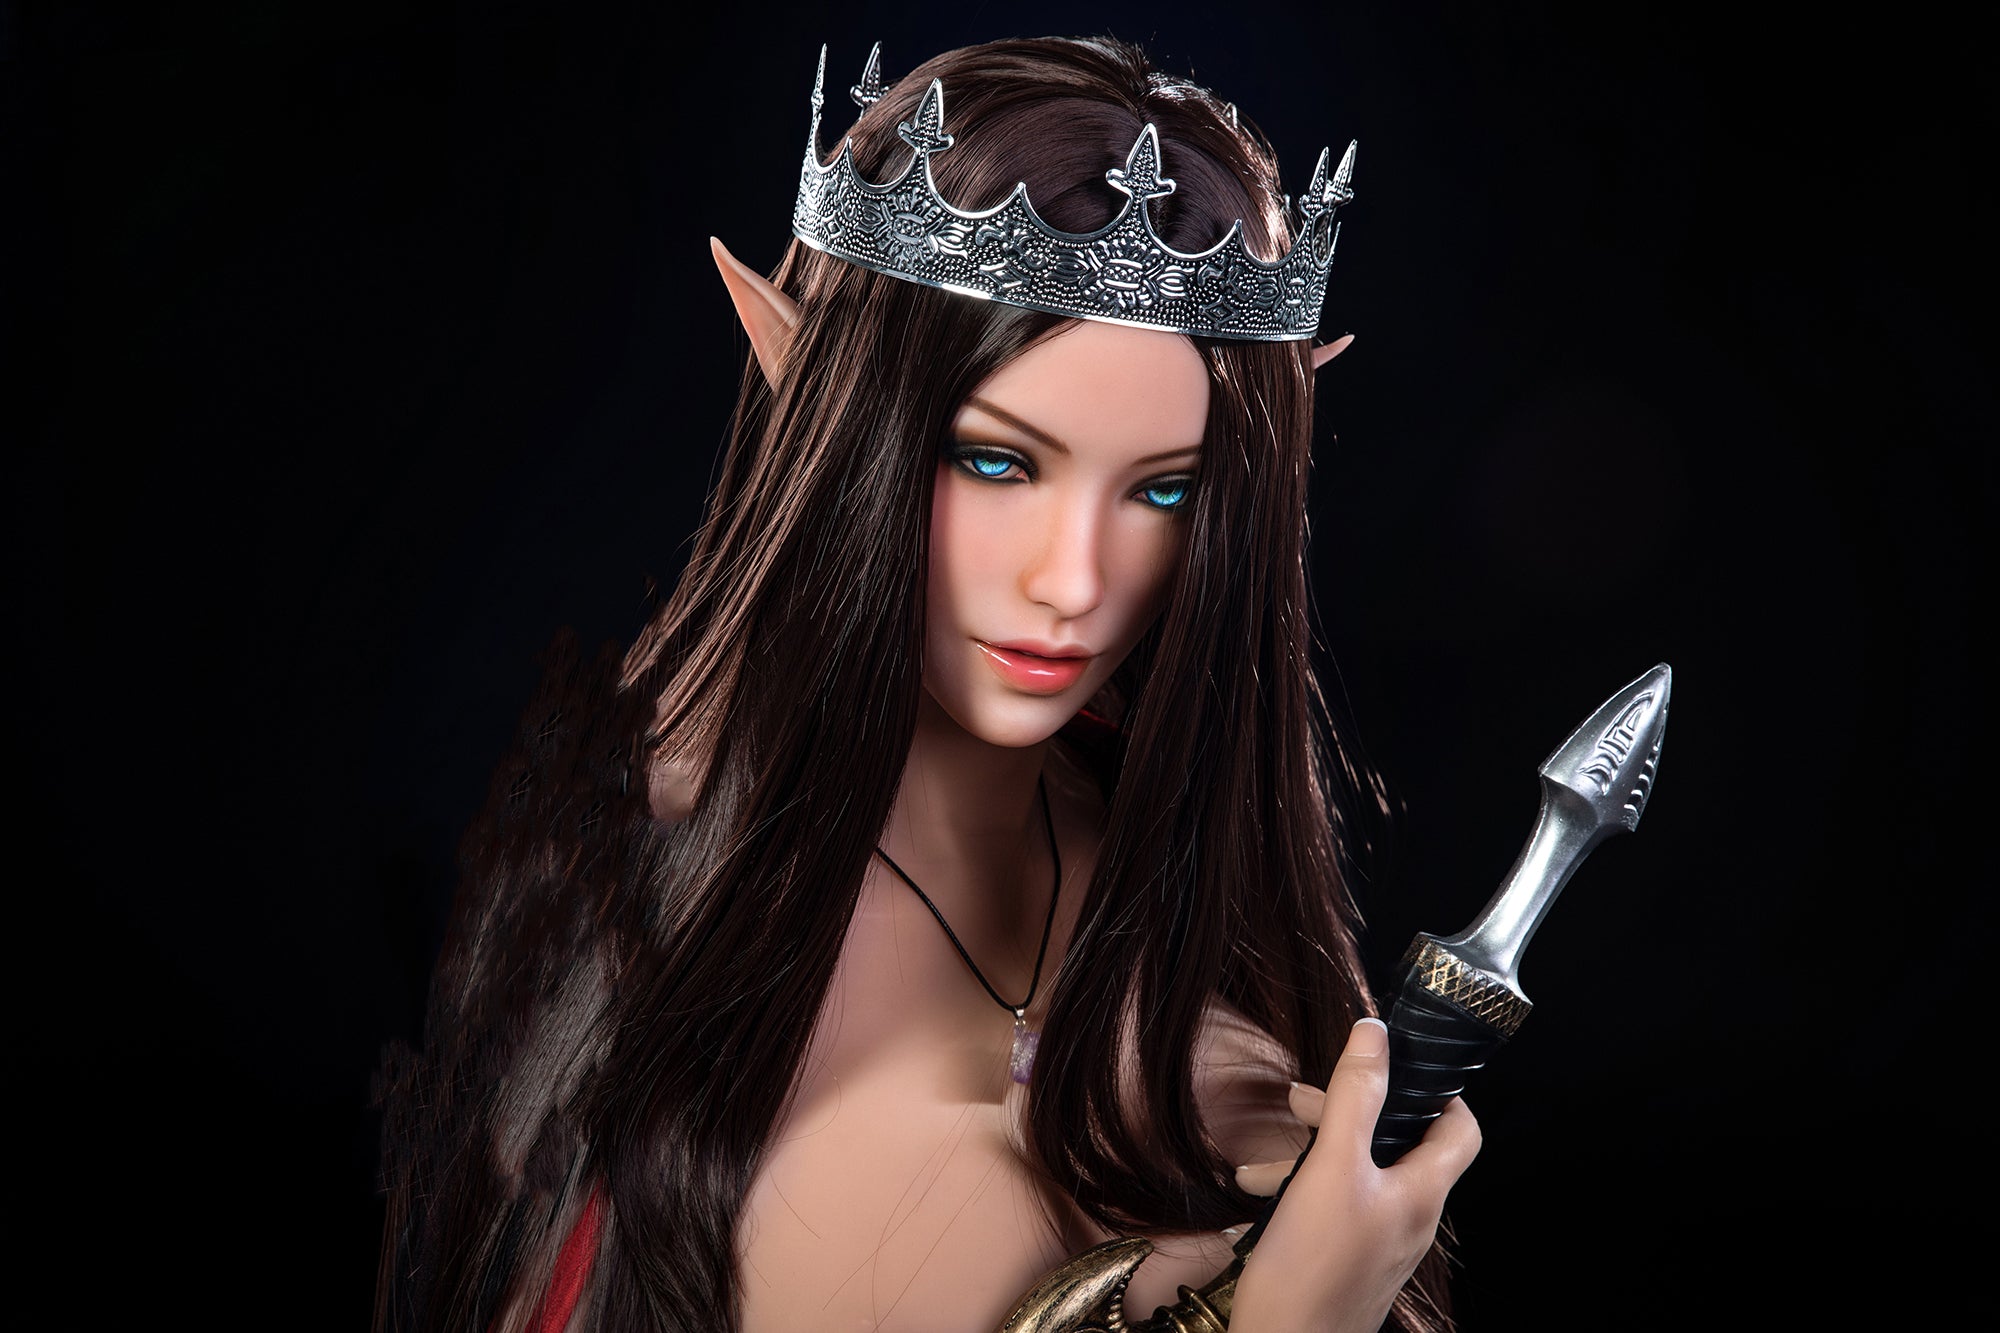 Sexdoll Adoptez “la Reine elfique Earwen” ! 